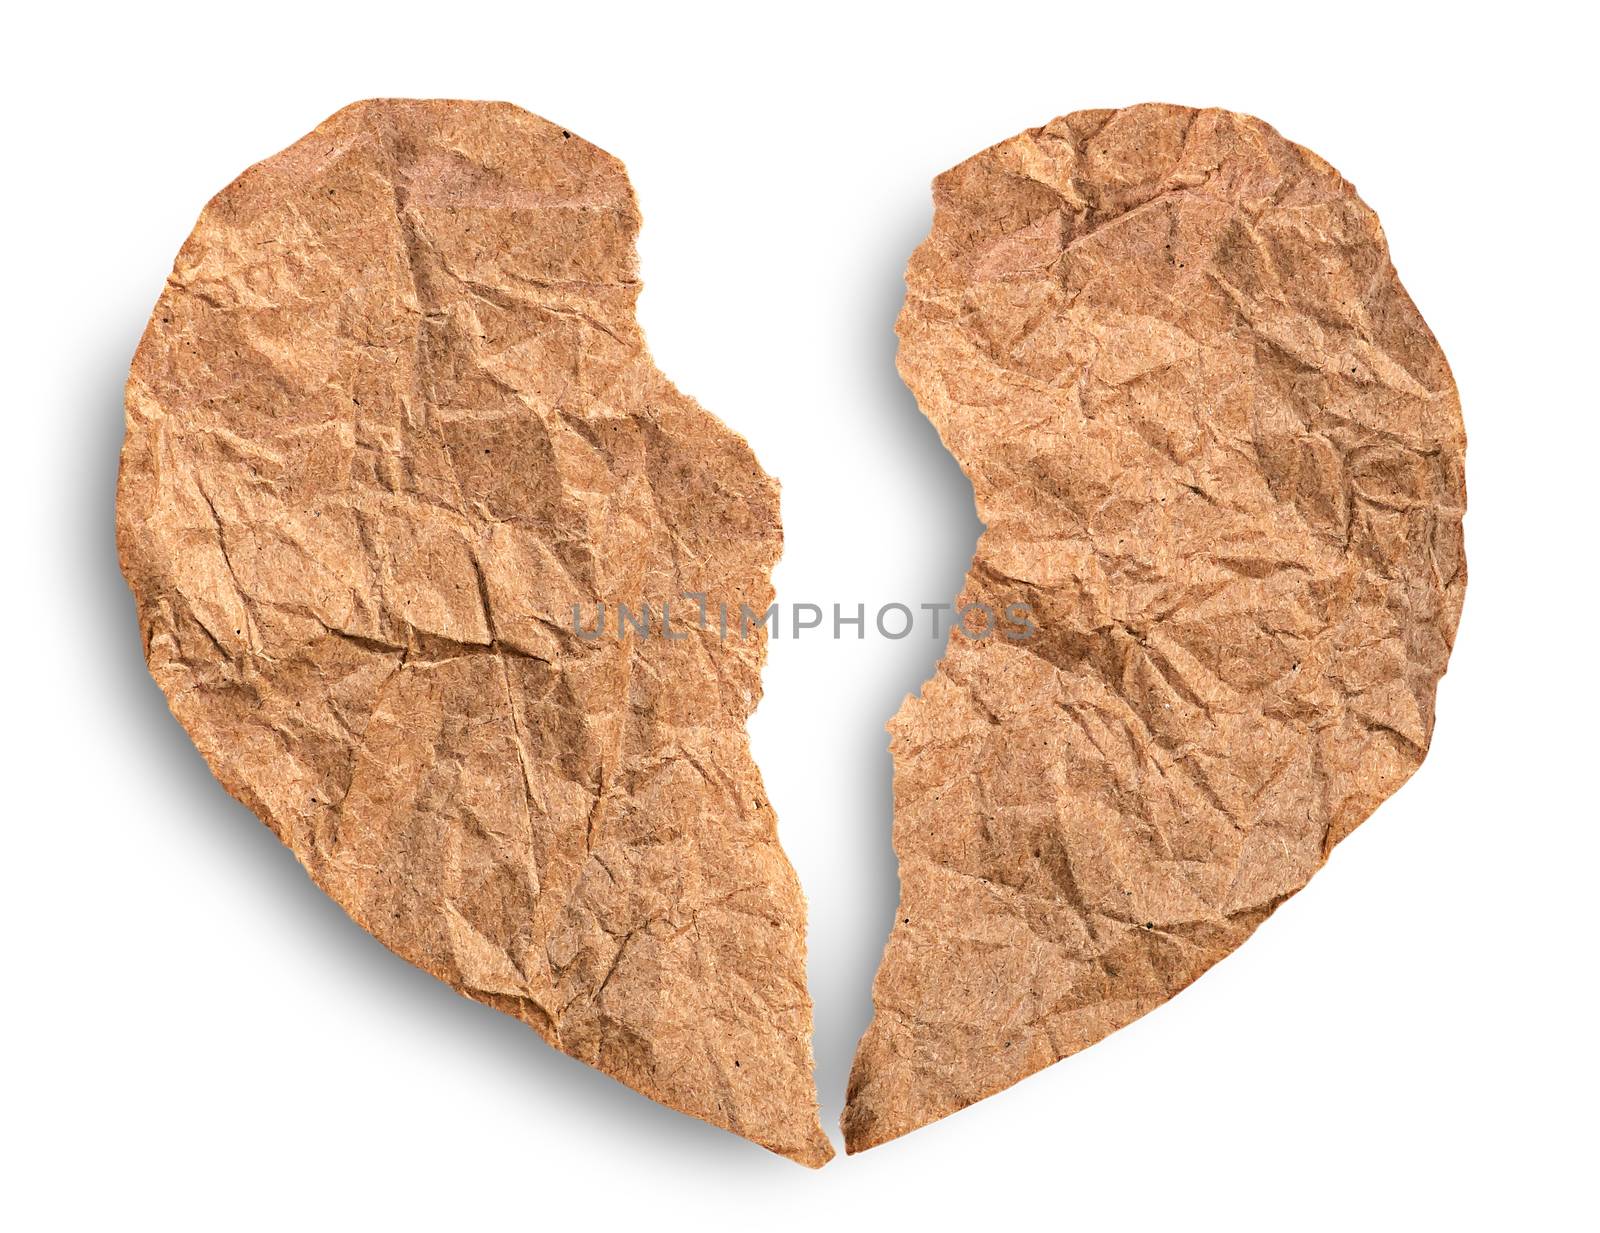 Rumpled torn paper heart by Cipariss